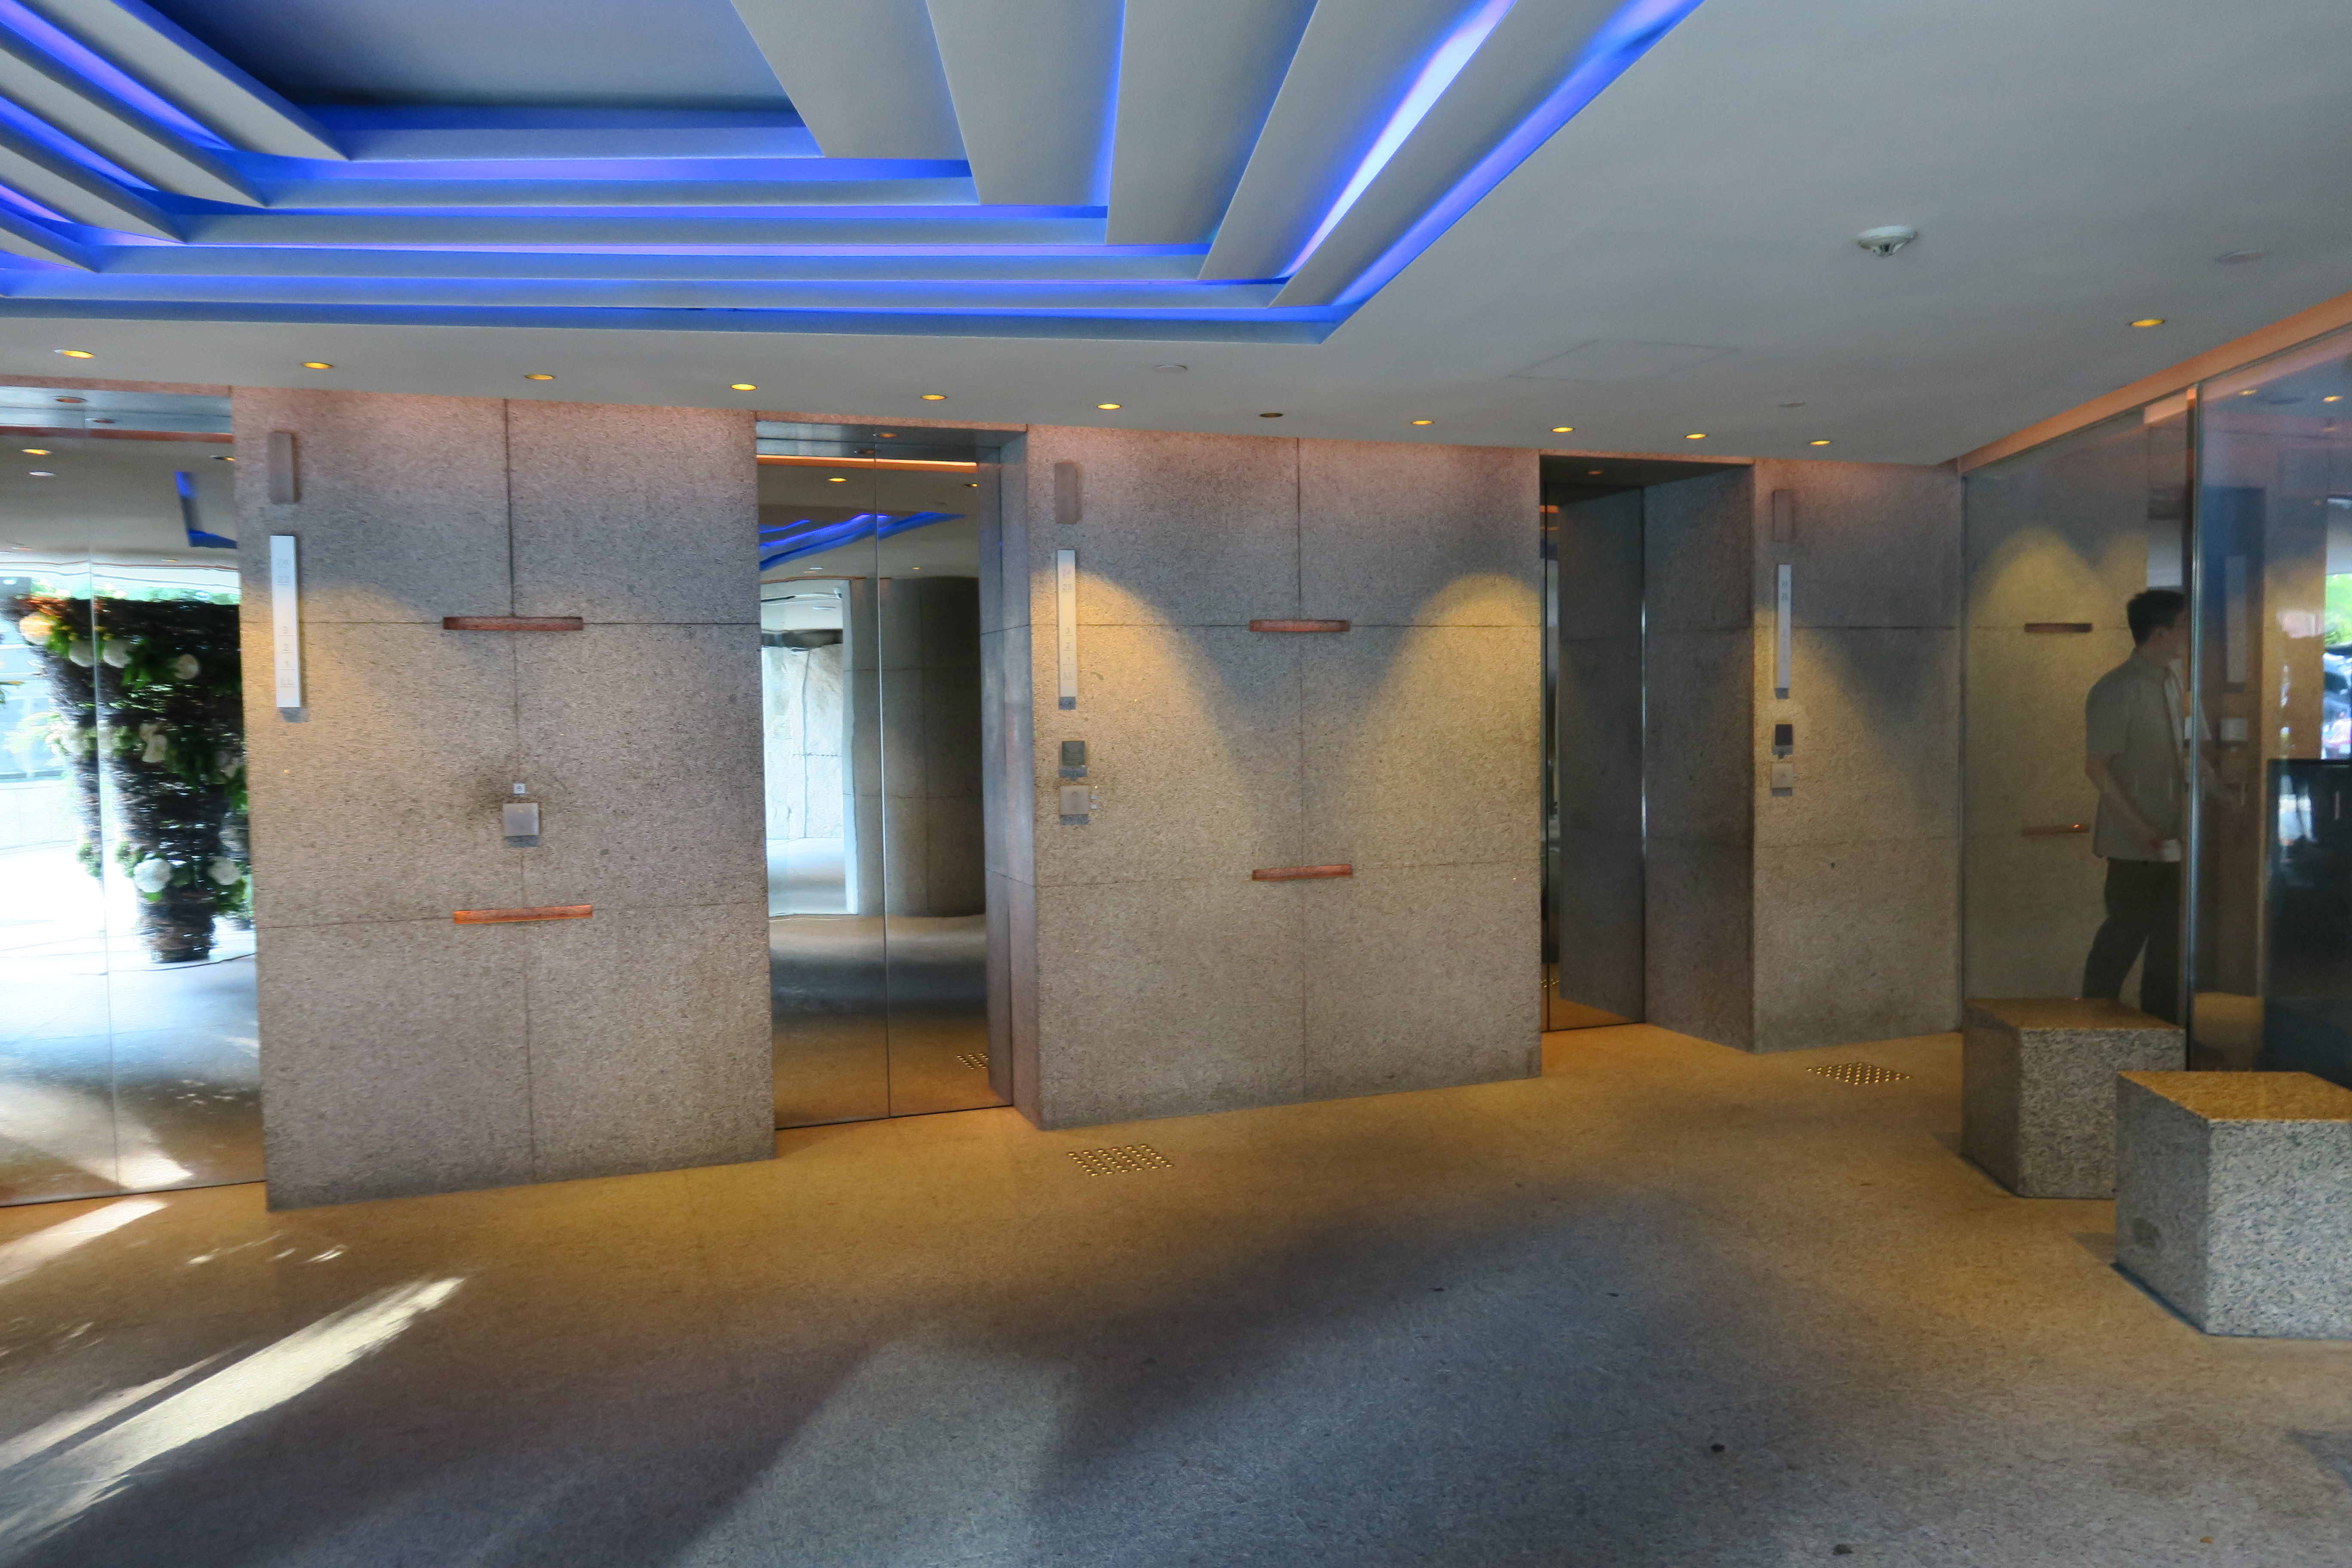 a elevator doors in a building